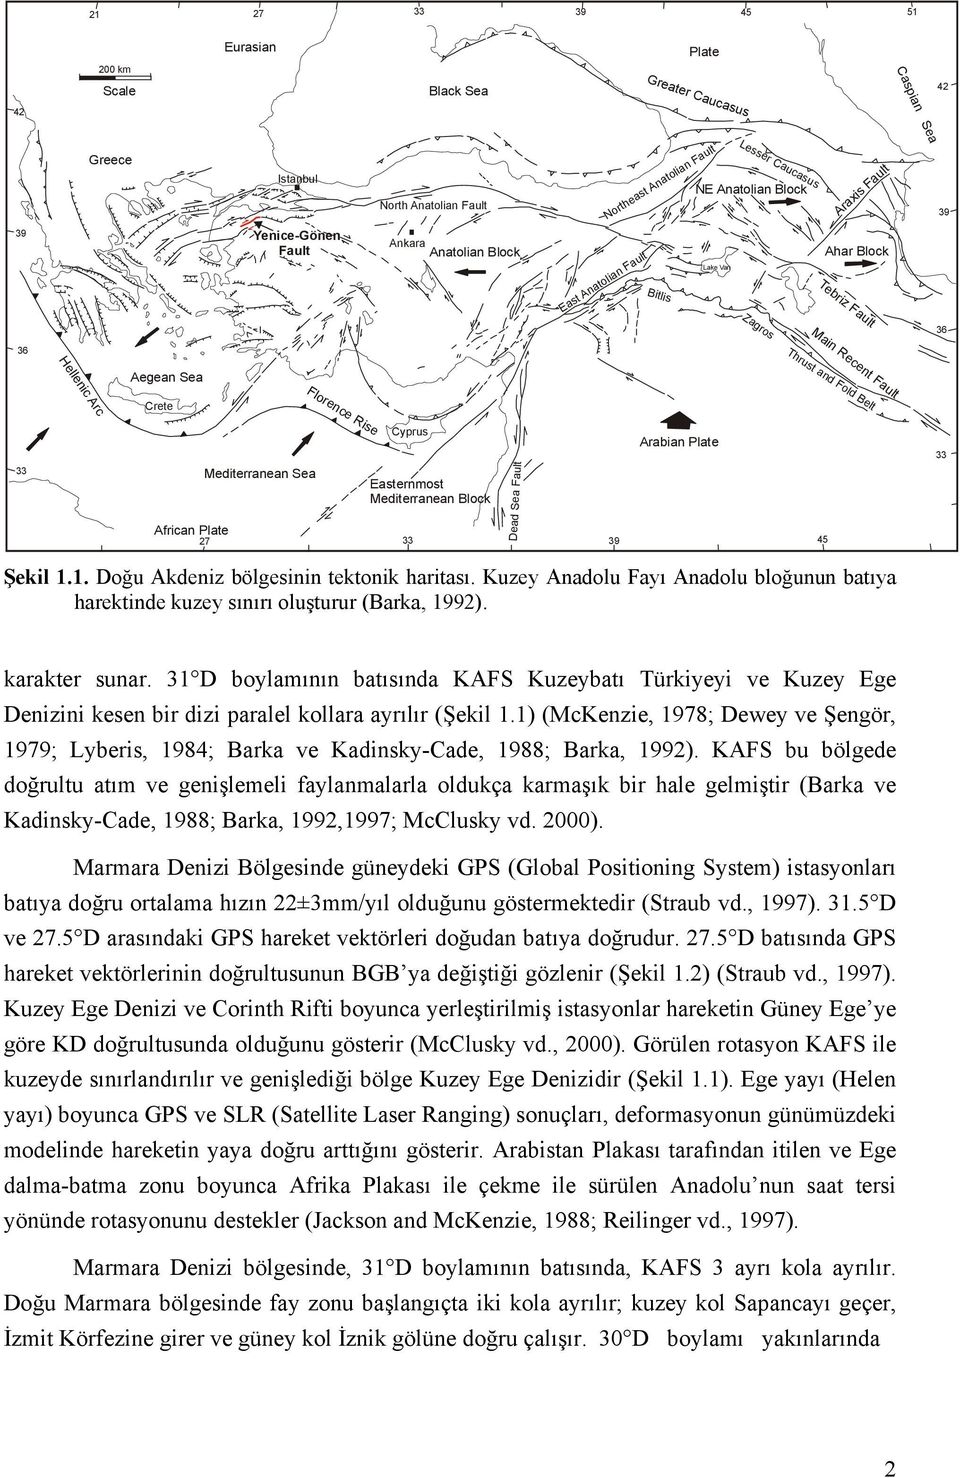 Rise Crete 33 Mediterranean Sea African Plate 27 Cyprus Easternmost Mediterranean Block 33 Dead Sea Fault 39 Arabian Plate 45 33 Şekil 1.1. Doğu Akdeniz bölgesinin tektonik haritası.